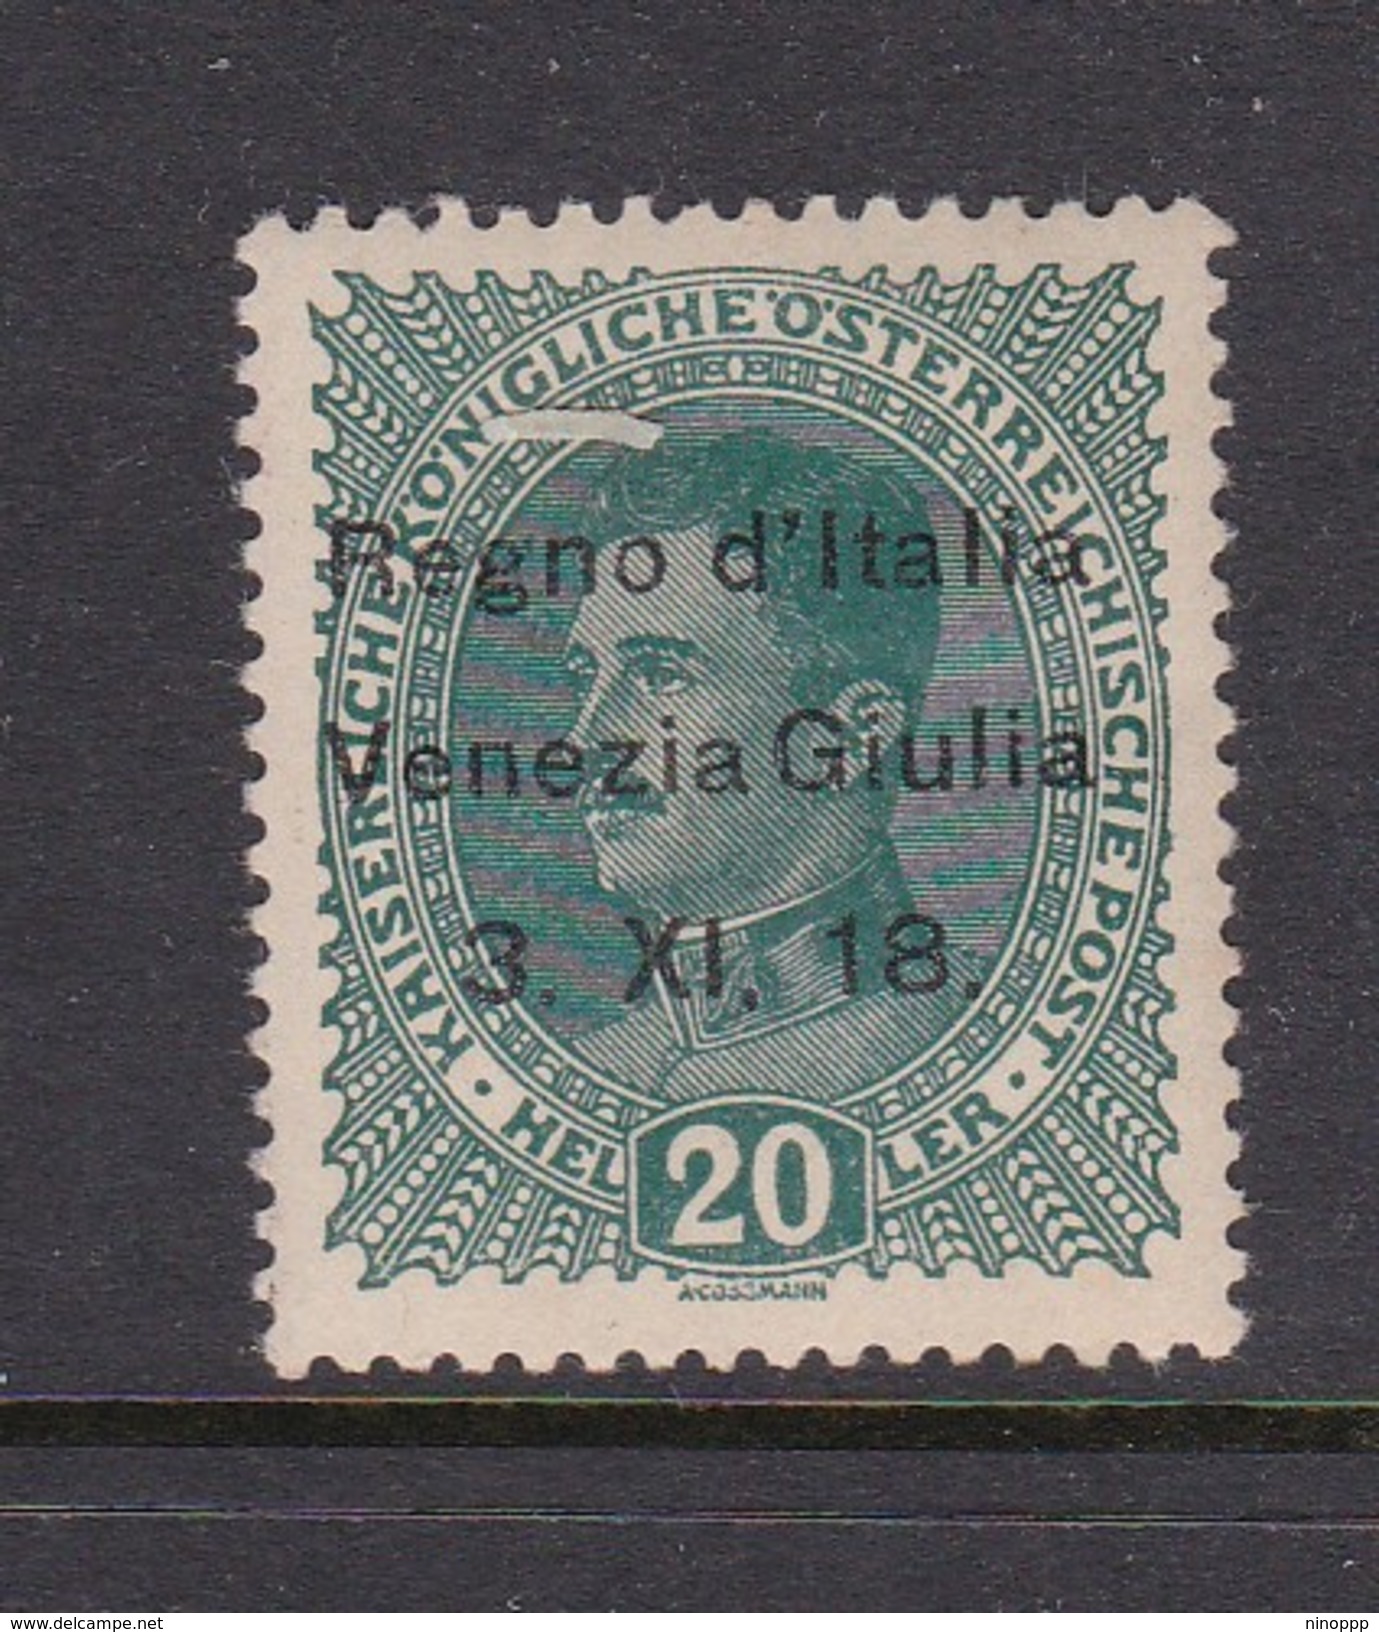 Venezia Giulia N7 1918 Austrian Stamps Overprinted 20h Dark Green Used - Austrian Occupation